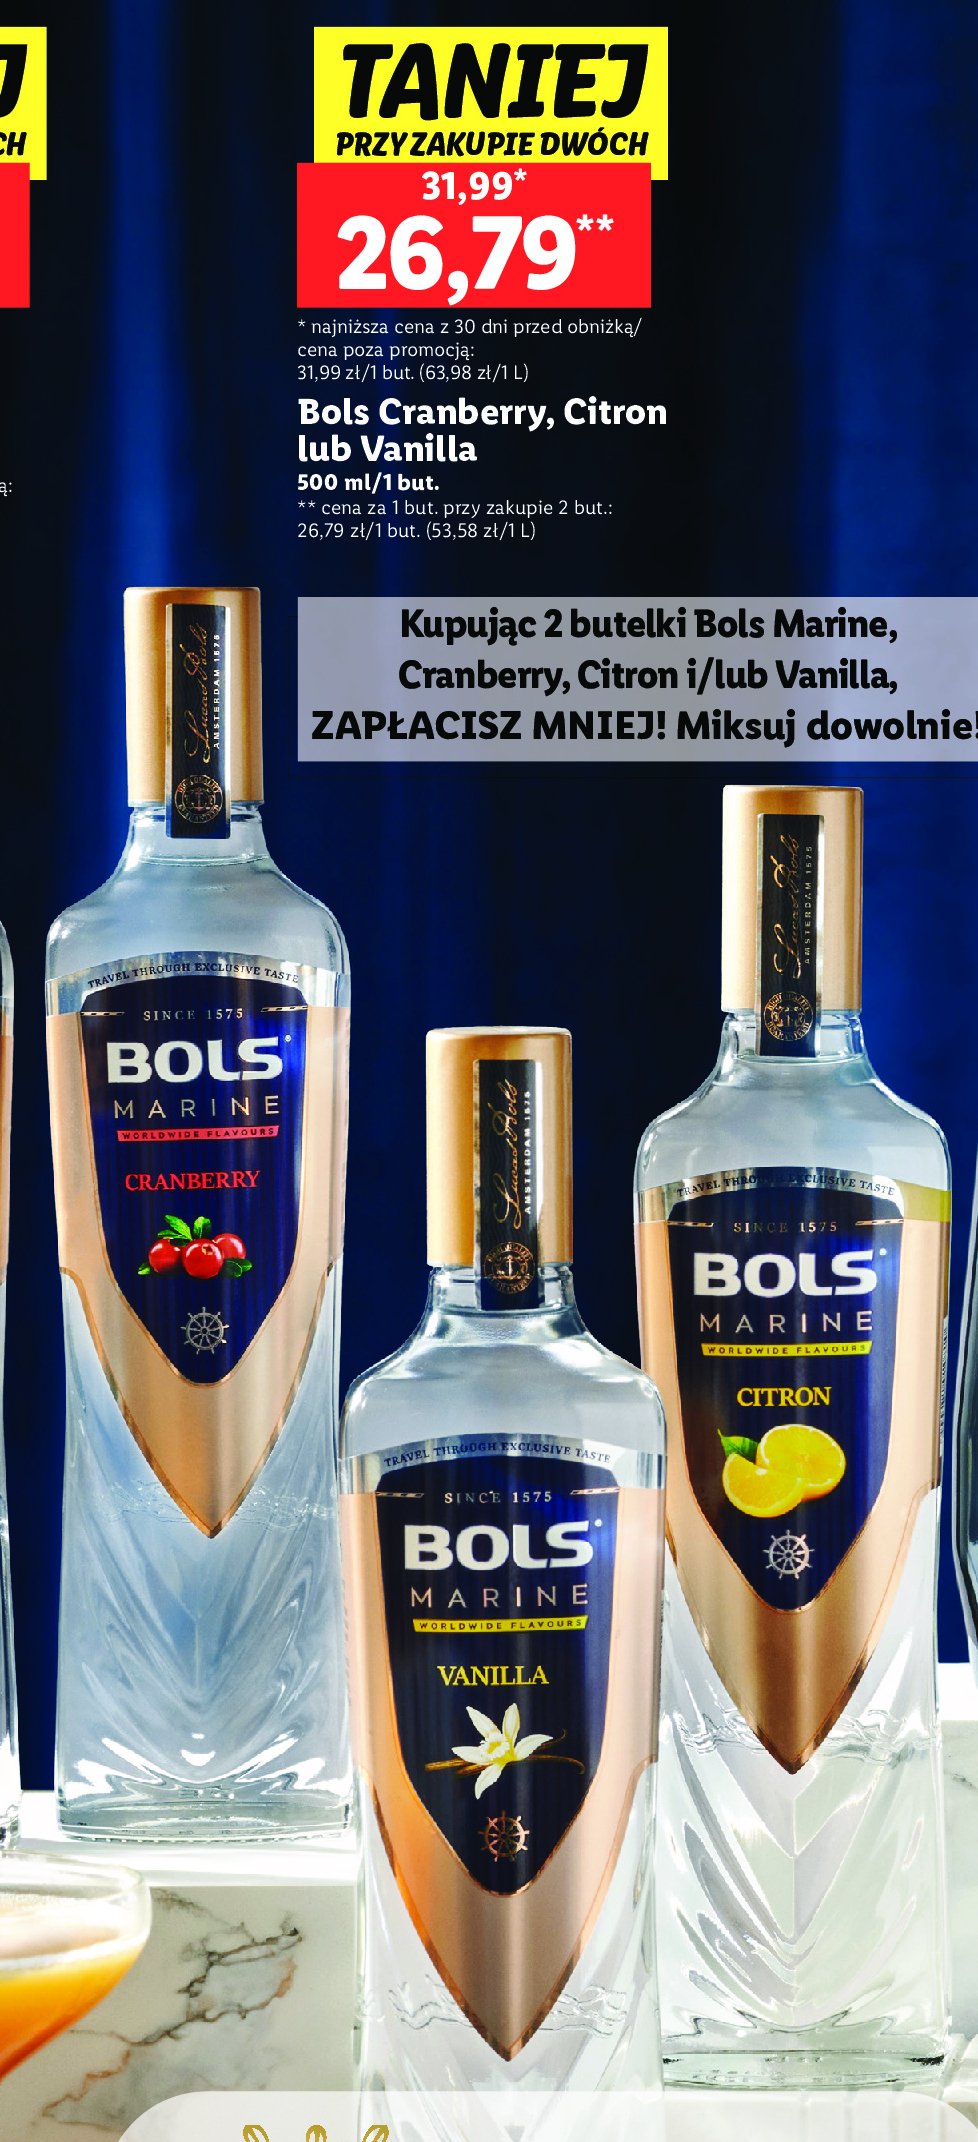 Wódka citron Bols marine promocja